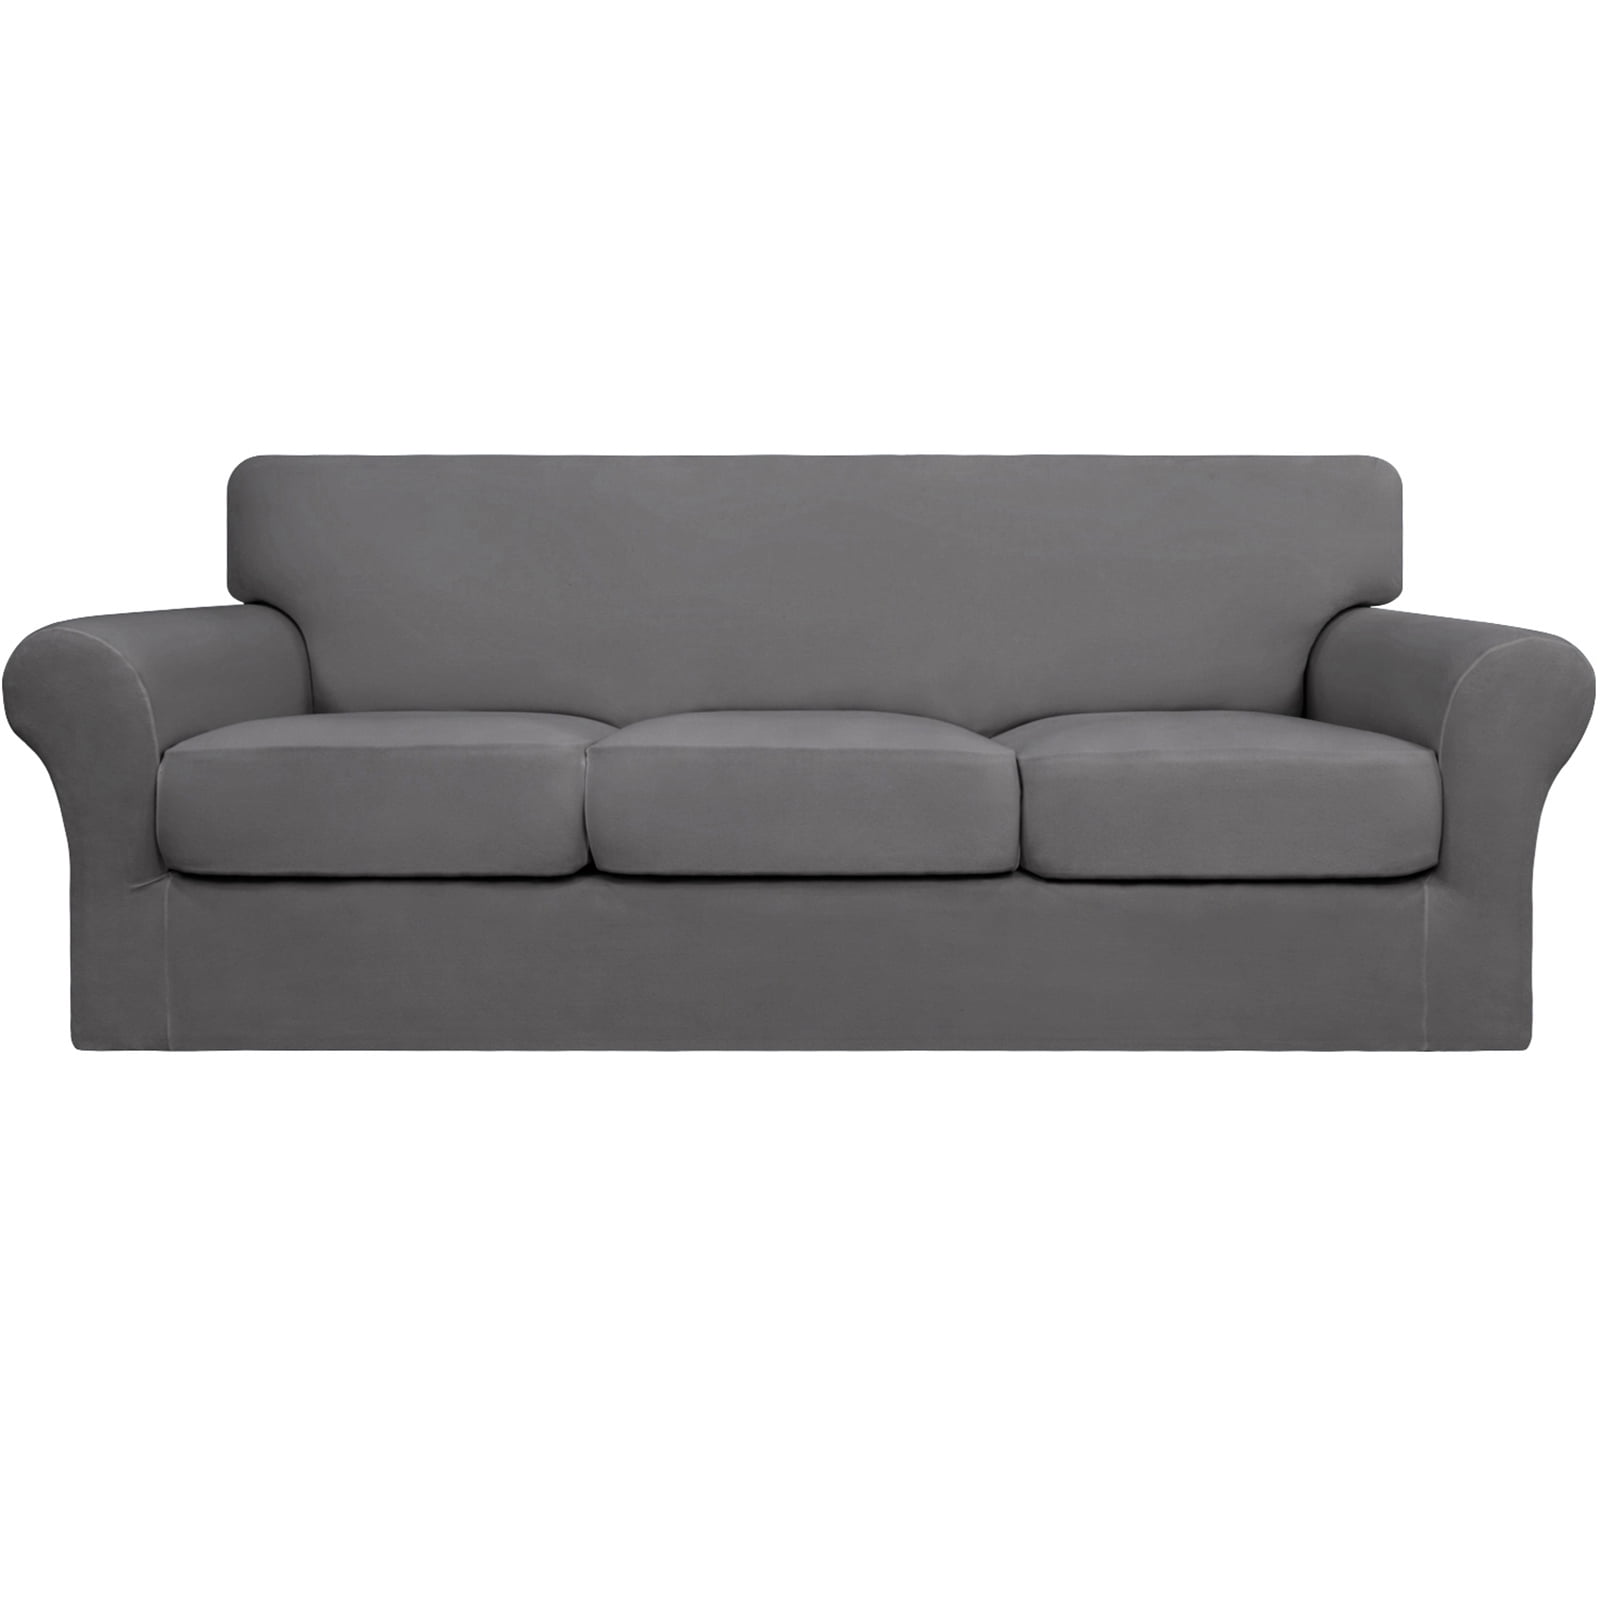 Easy-Going 8541872432 Stretch Sofa Slipcover Dark Gray for sale online 